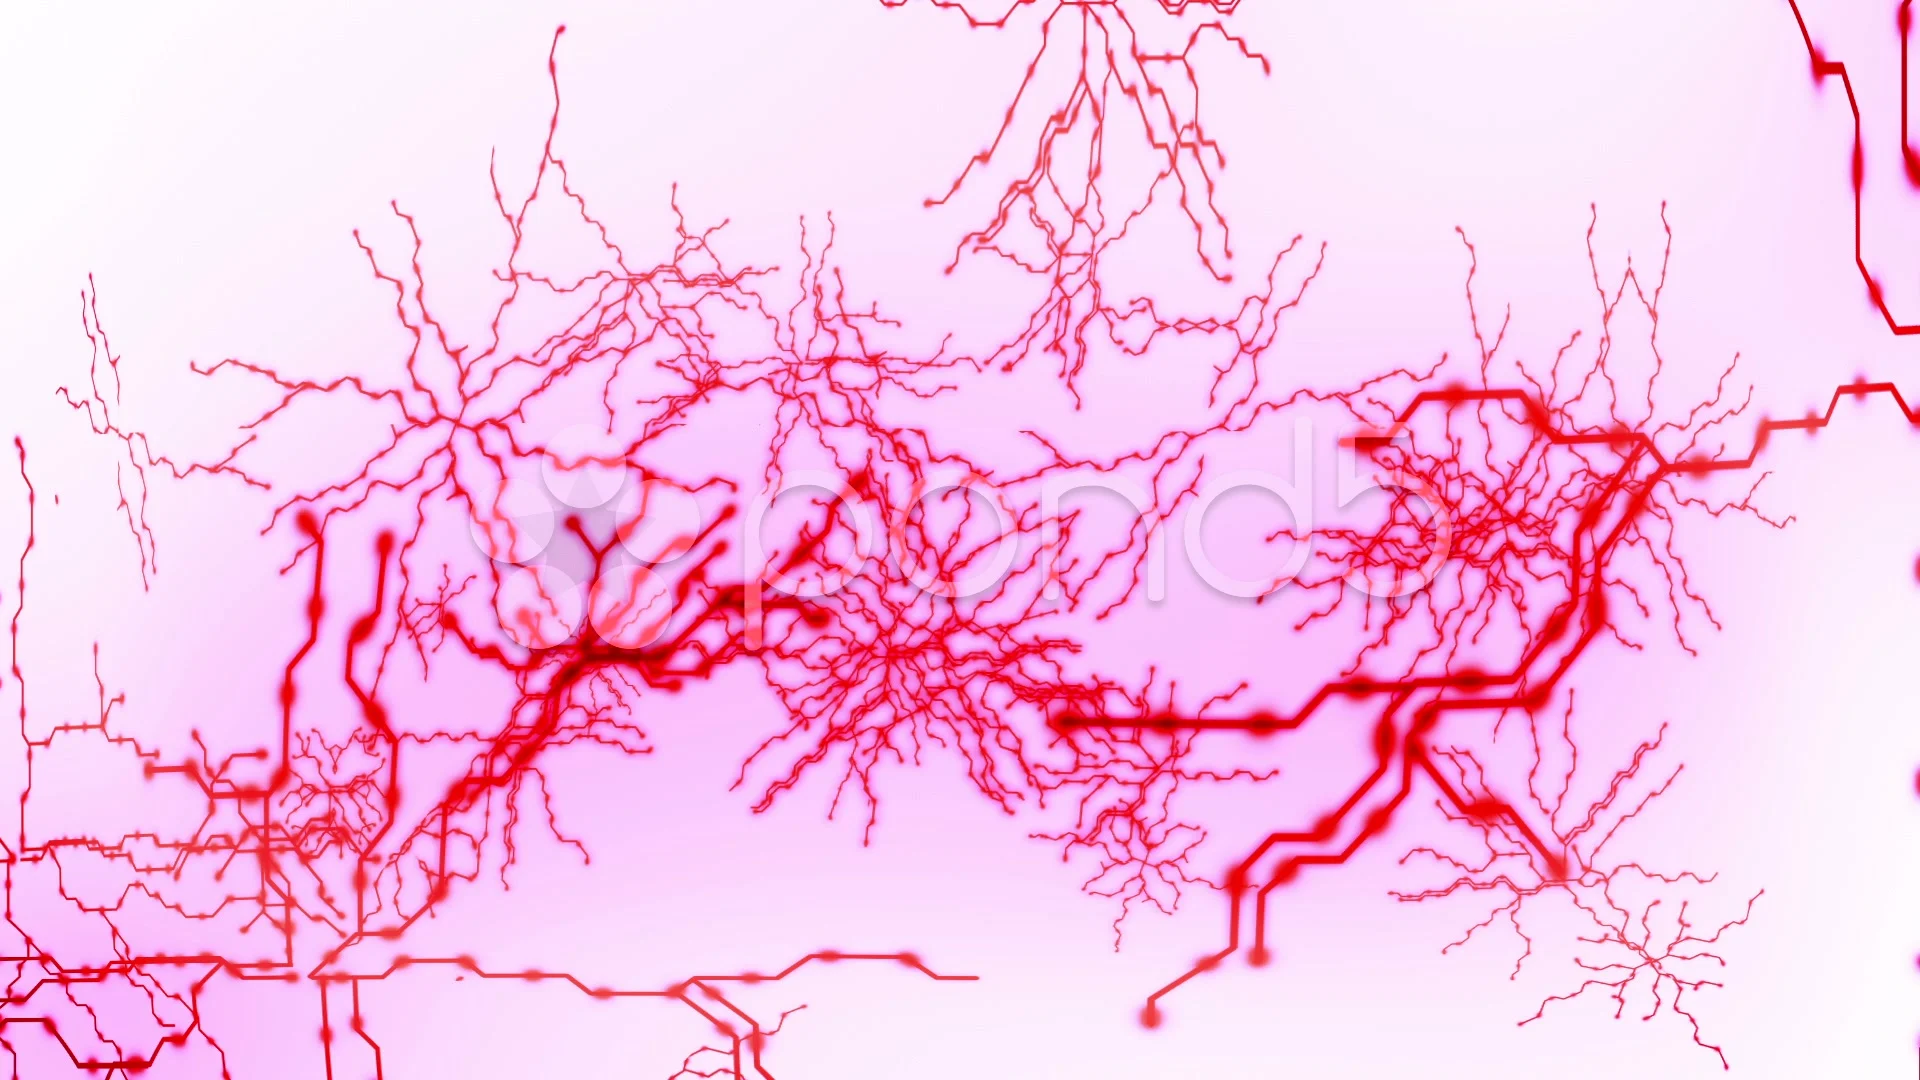 blood veins texture